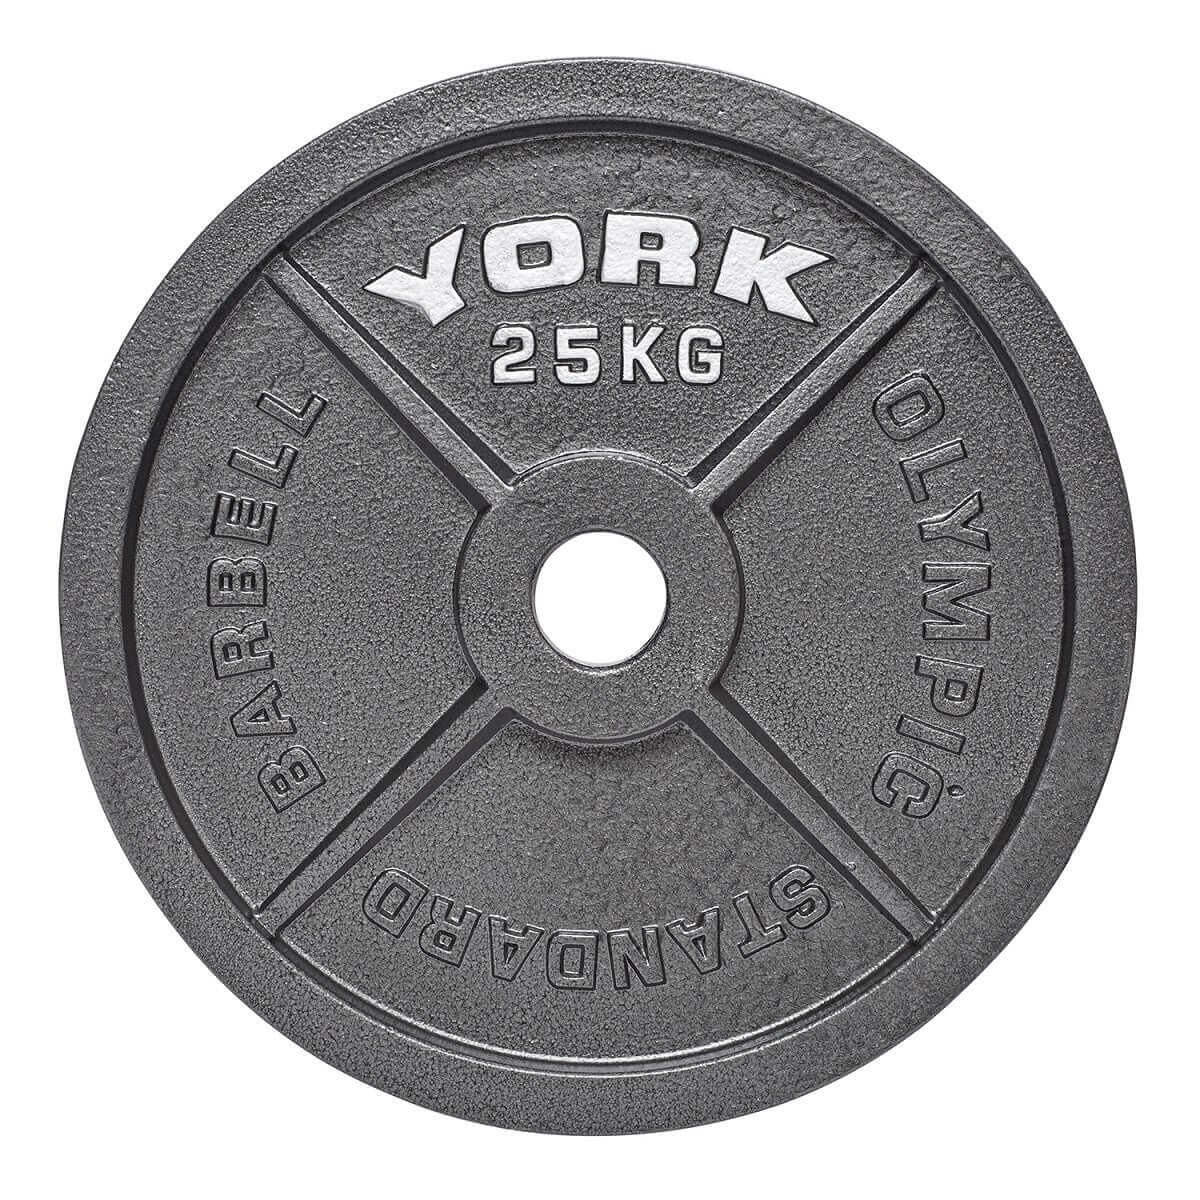 York 1 x 25kg Olympic Hammertone Cast Iron Weight Plate 2/3